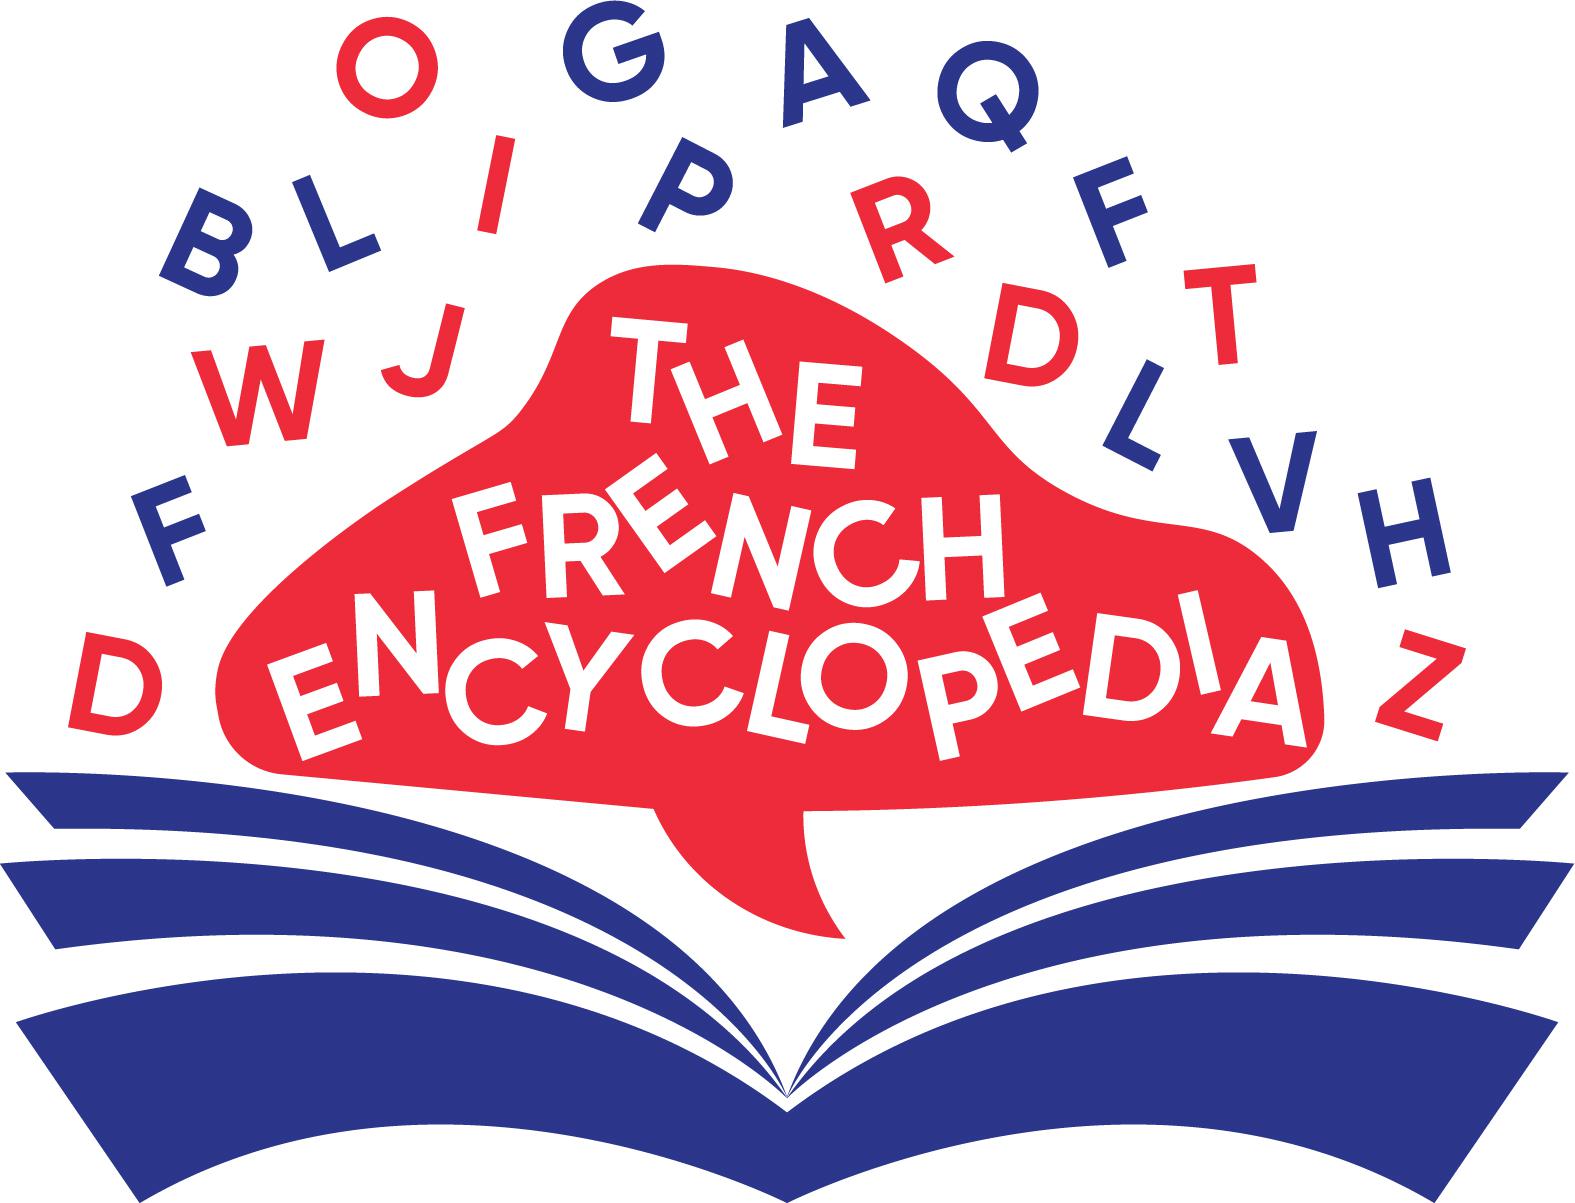 The French Encyclopedia Logo